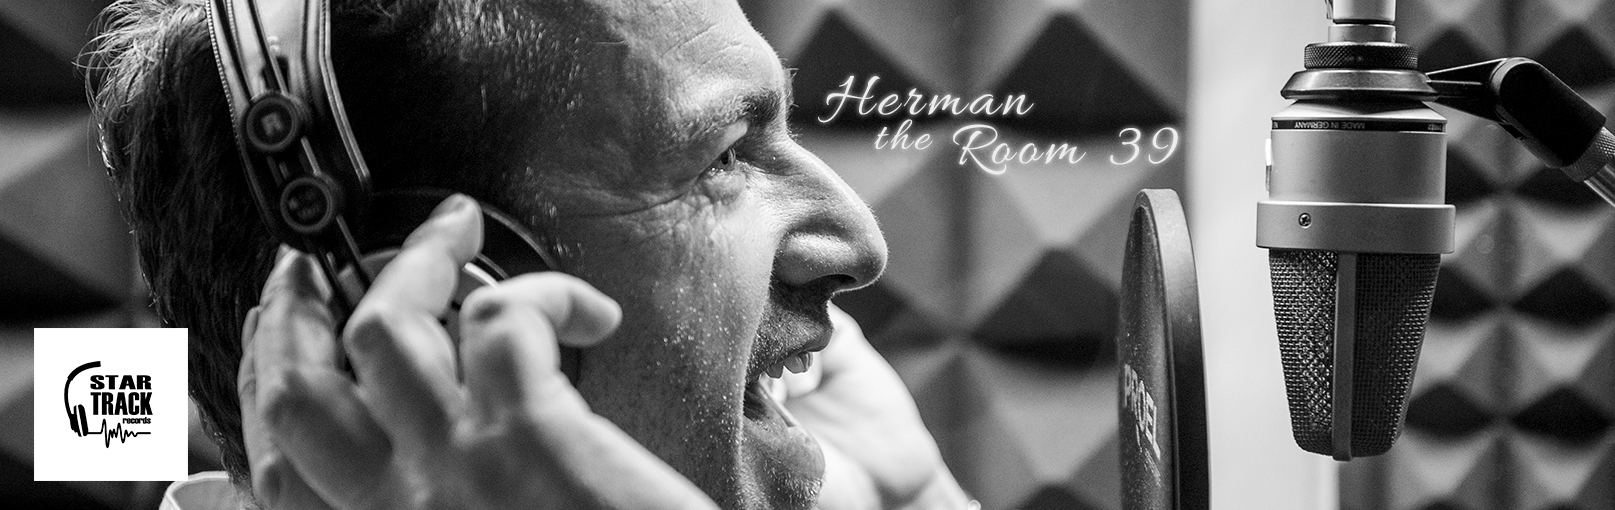 Herman the Room 39 Startrack Records Armando Saccon